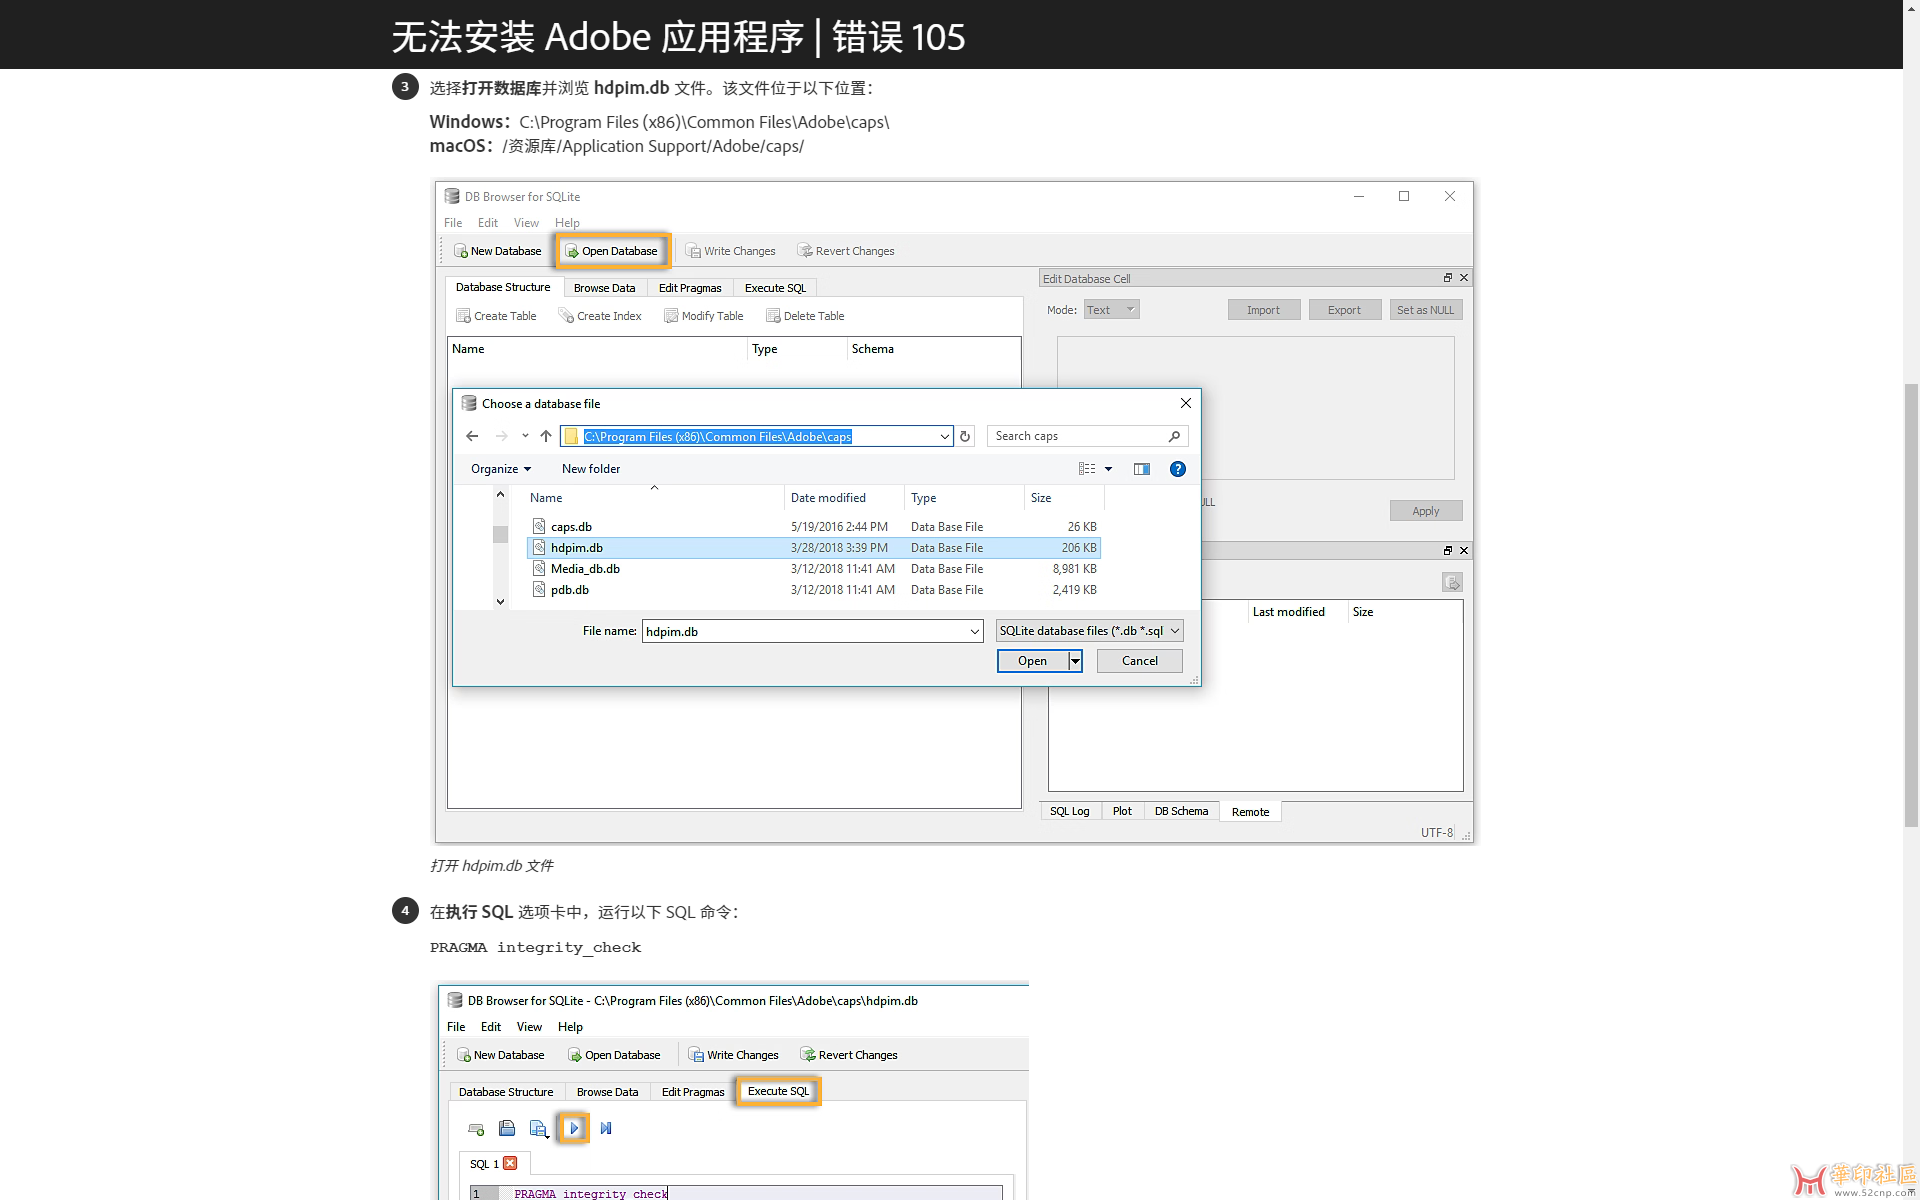 Adobe产品系列：弹窗“1”“44”“105”的修复教程{tag}(9)